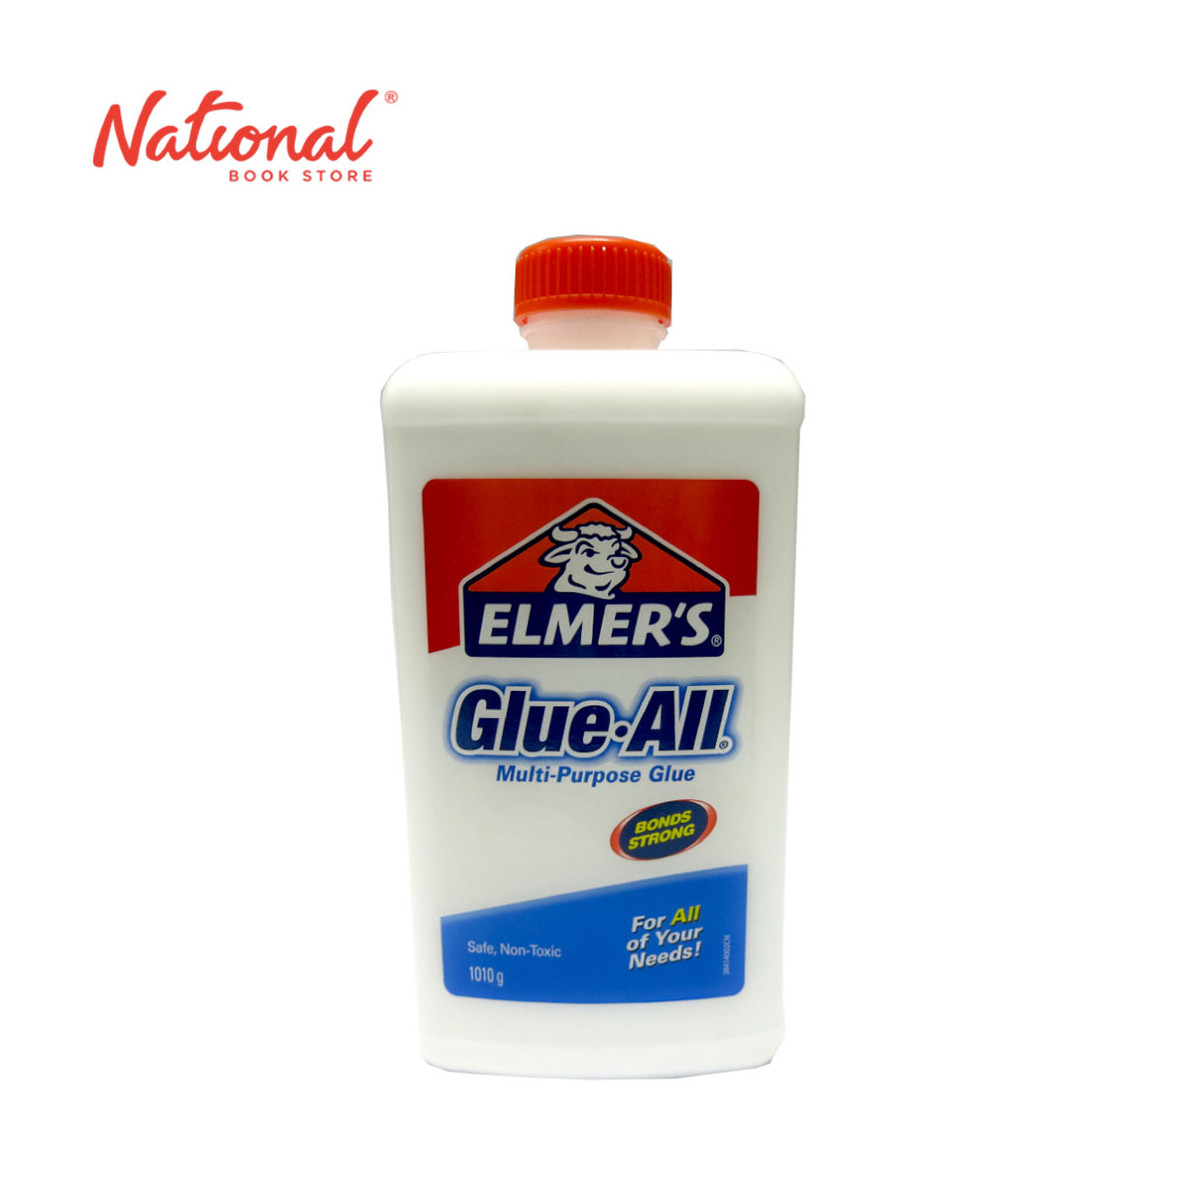 Elmer's Glue White All Elmers US 1 Kilo E-384PH - School & Office Supplies